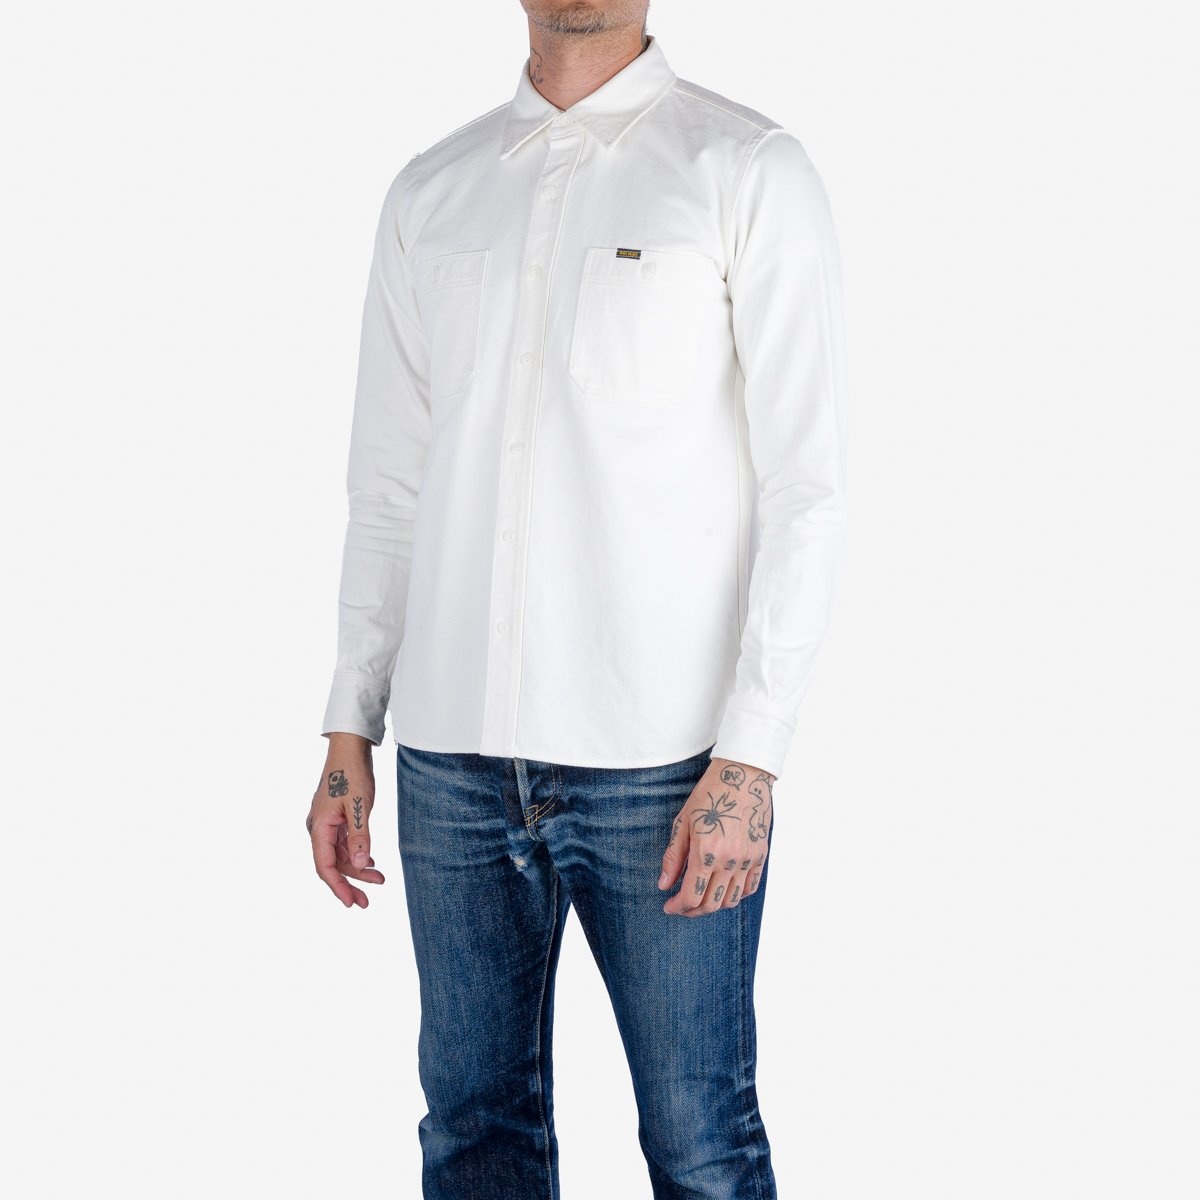 IHSH-391-WHT 13.5oz Denim Work Shirt - White - 2